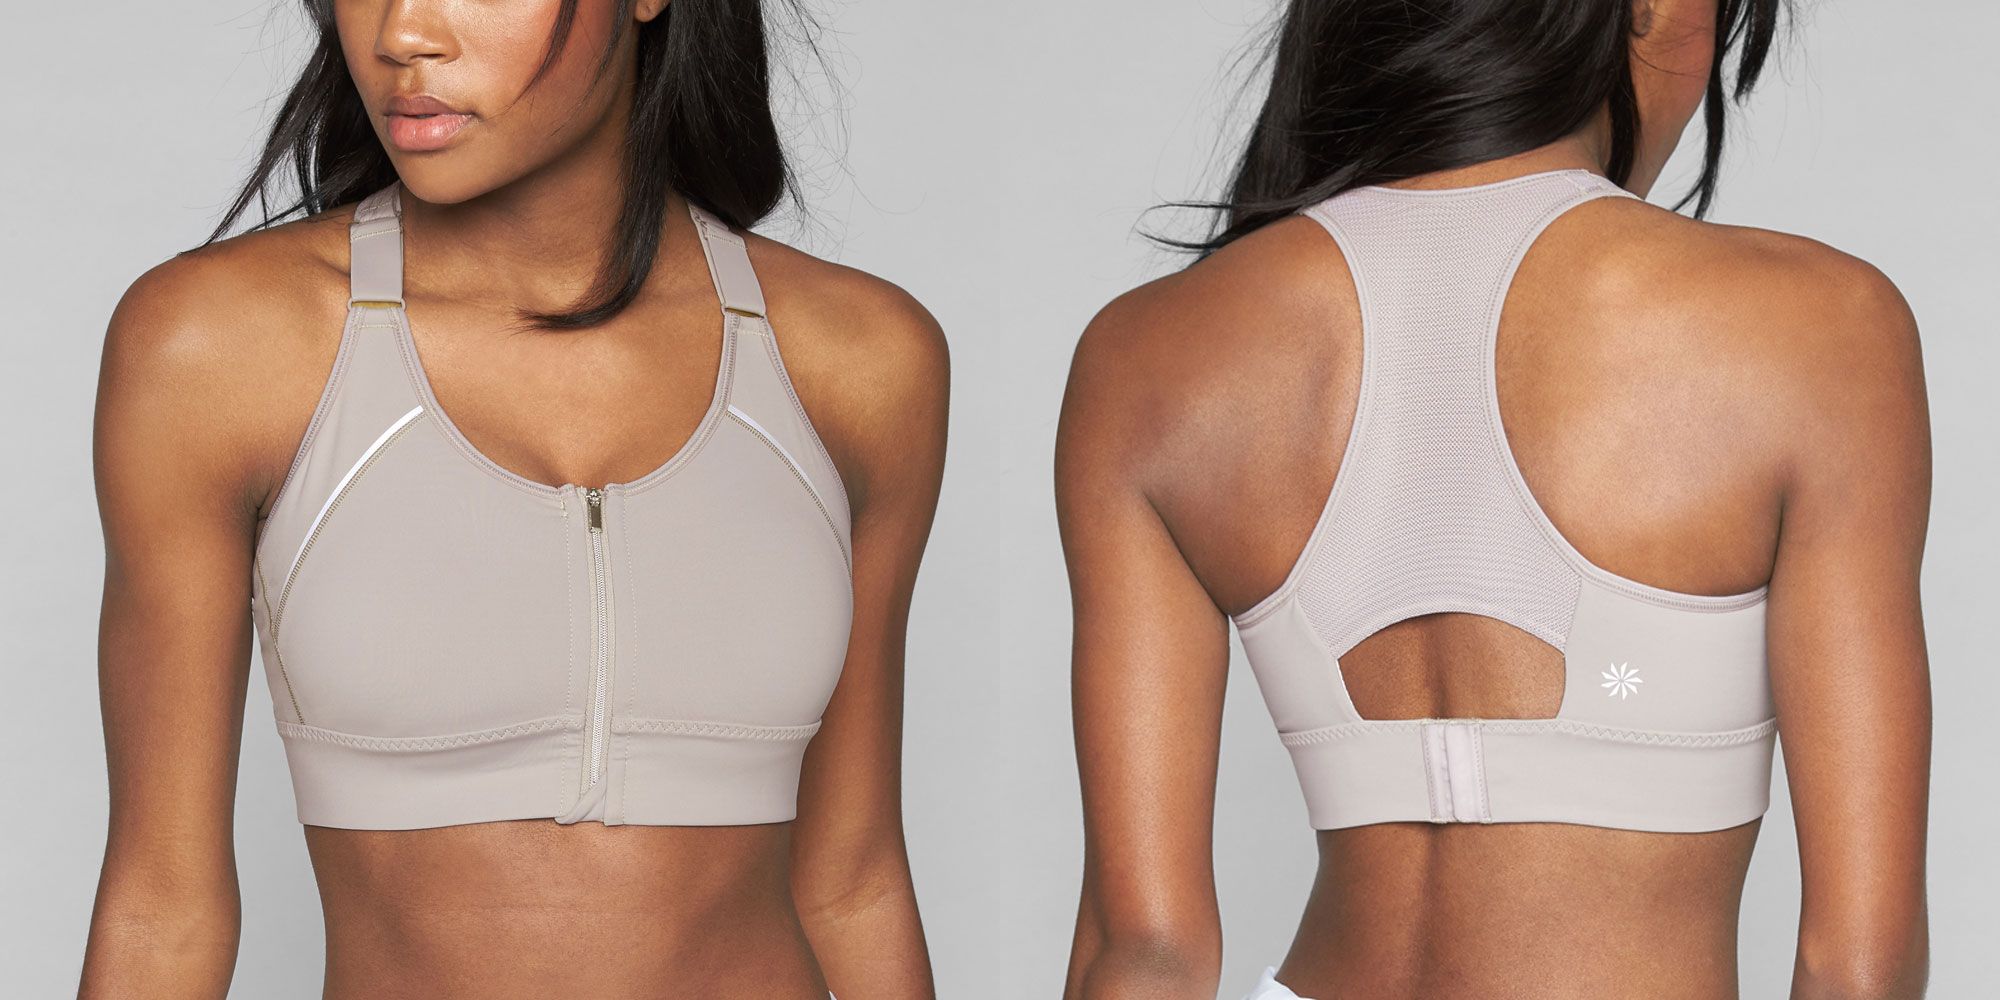 Can Wearing A Sports Bra Stop Breast Growth? – solowomen